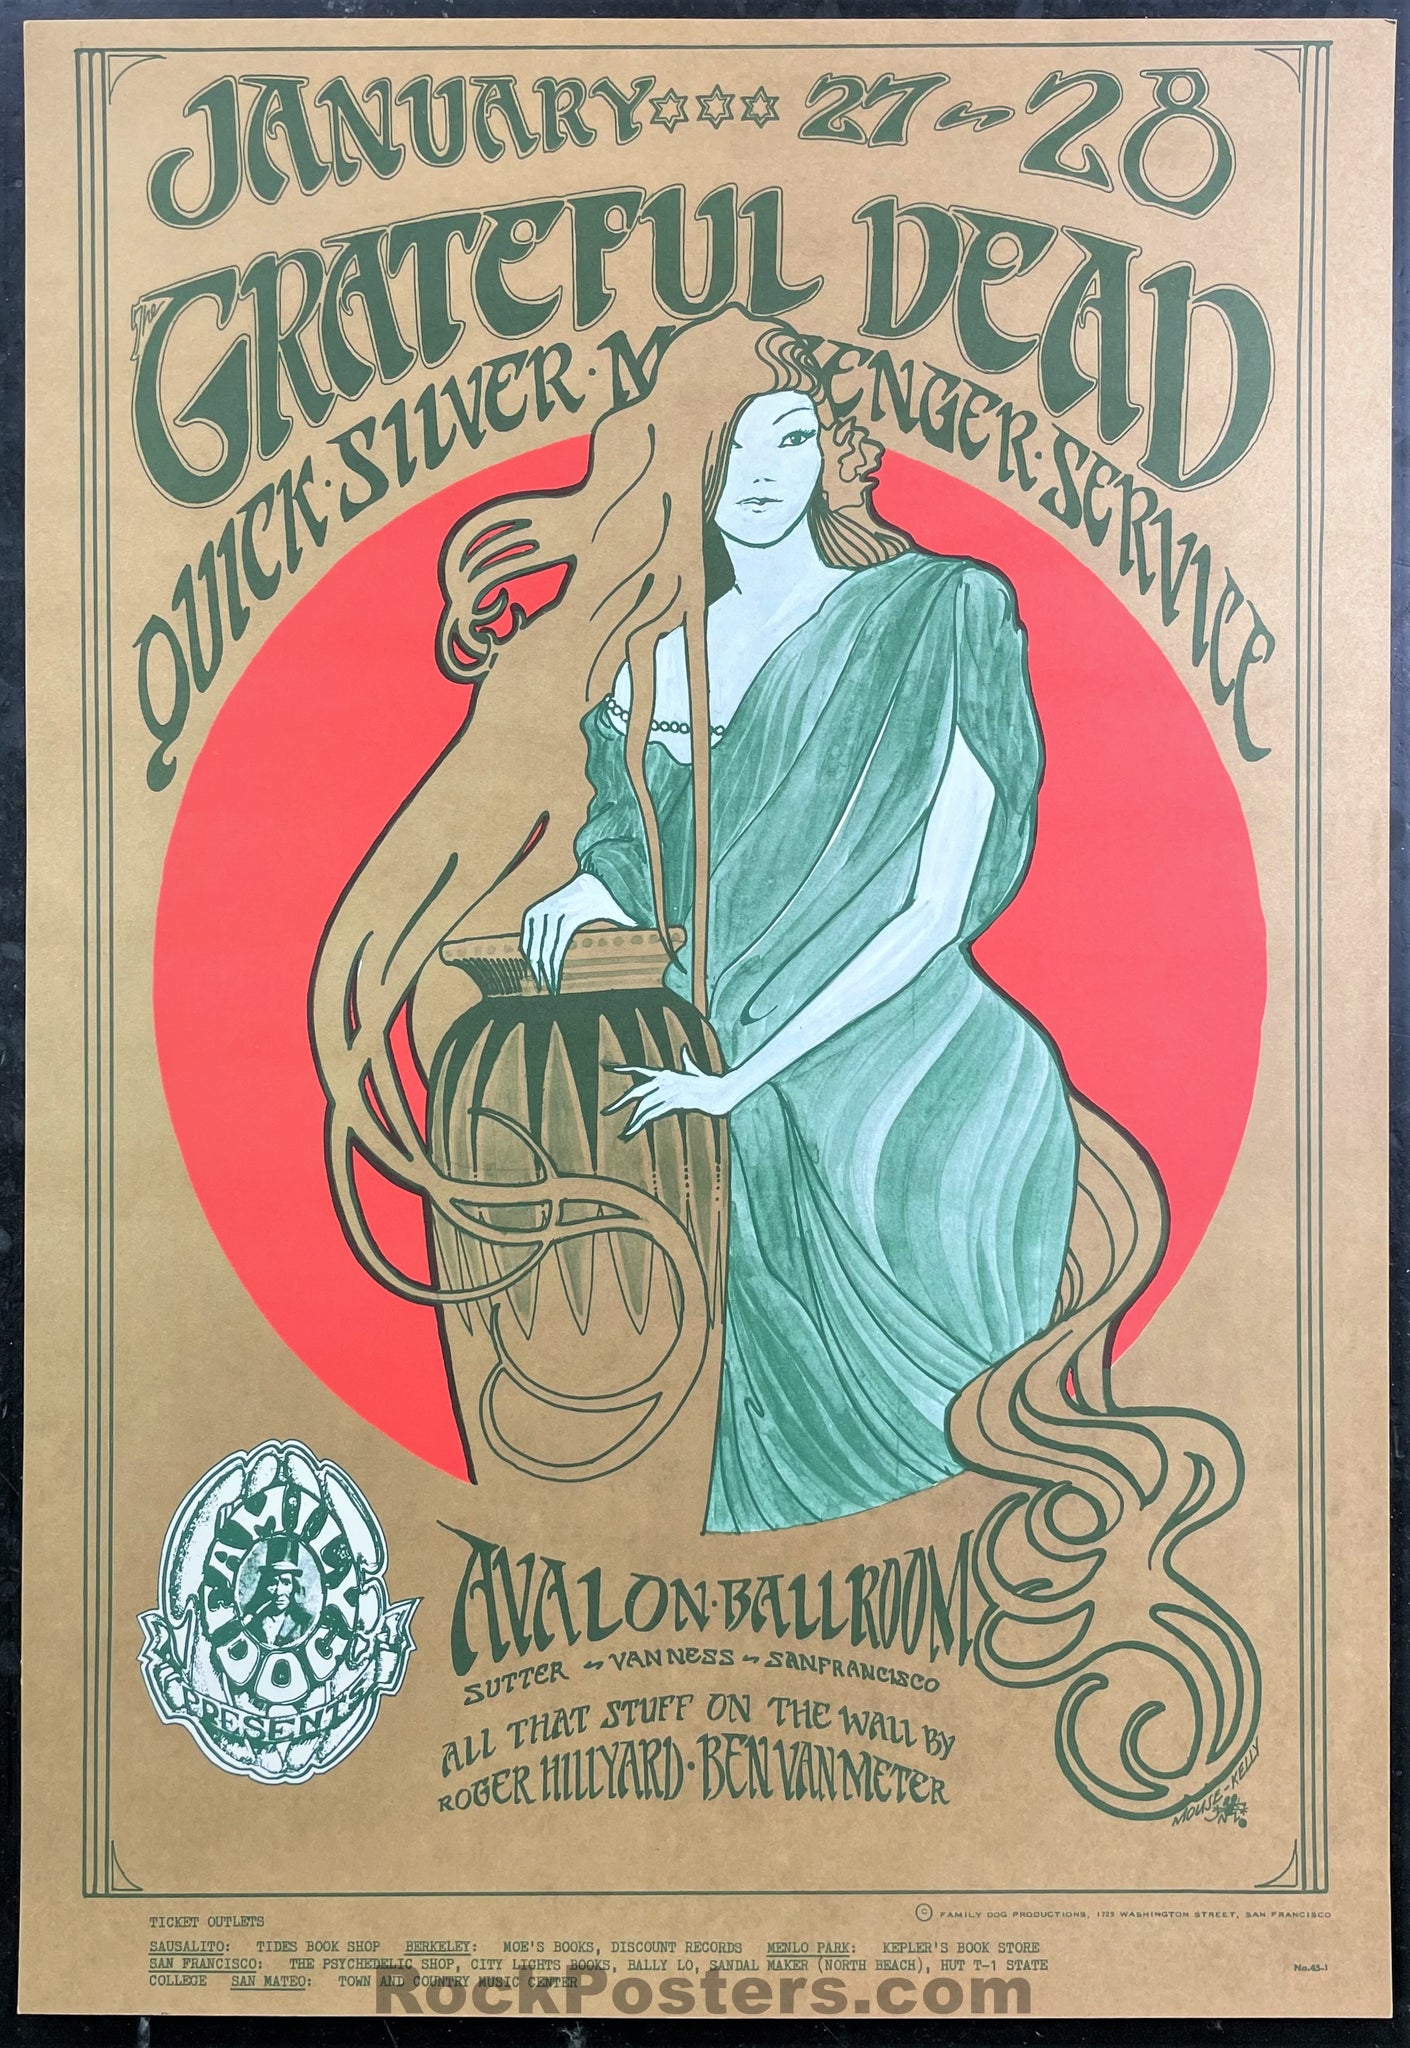 AUCTION - FD-45 - The Grateful Dead - 1967 Poster - Avalon Ballroom - Near Mint